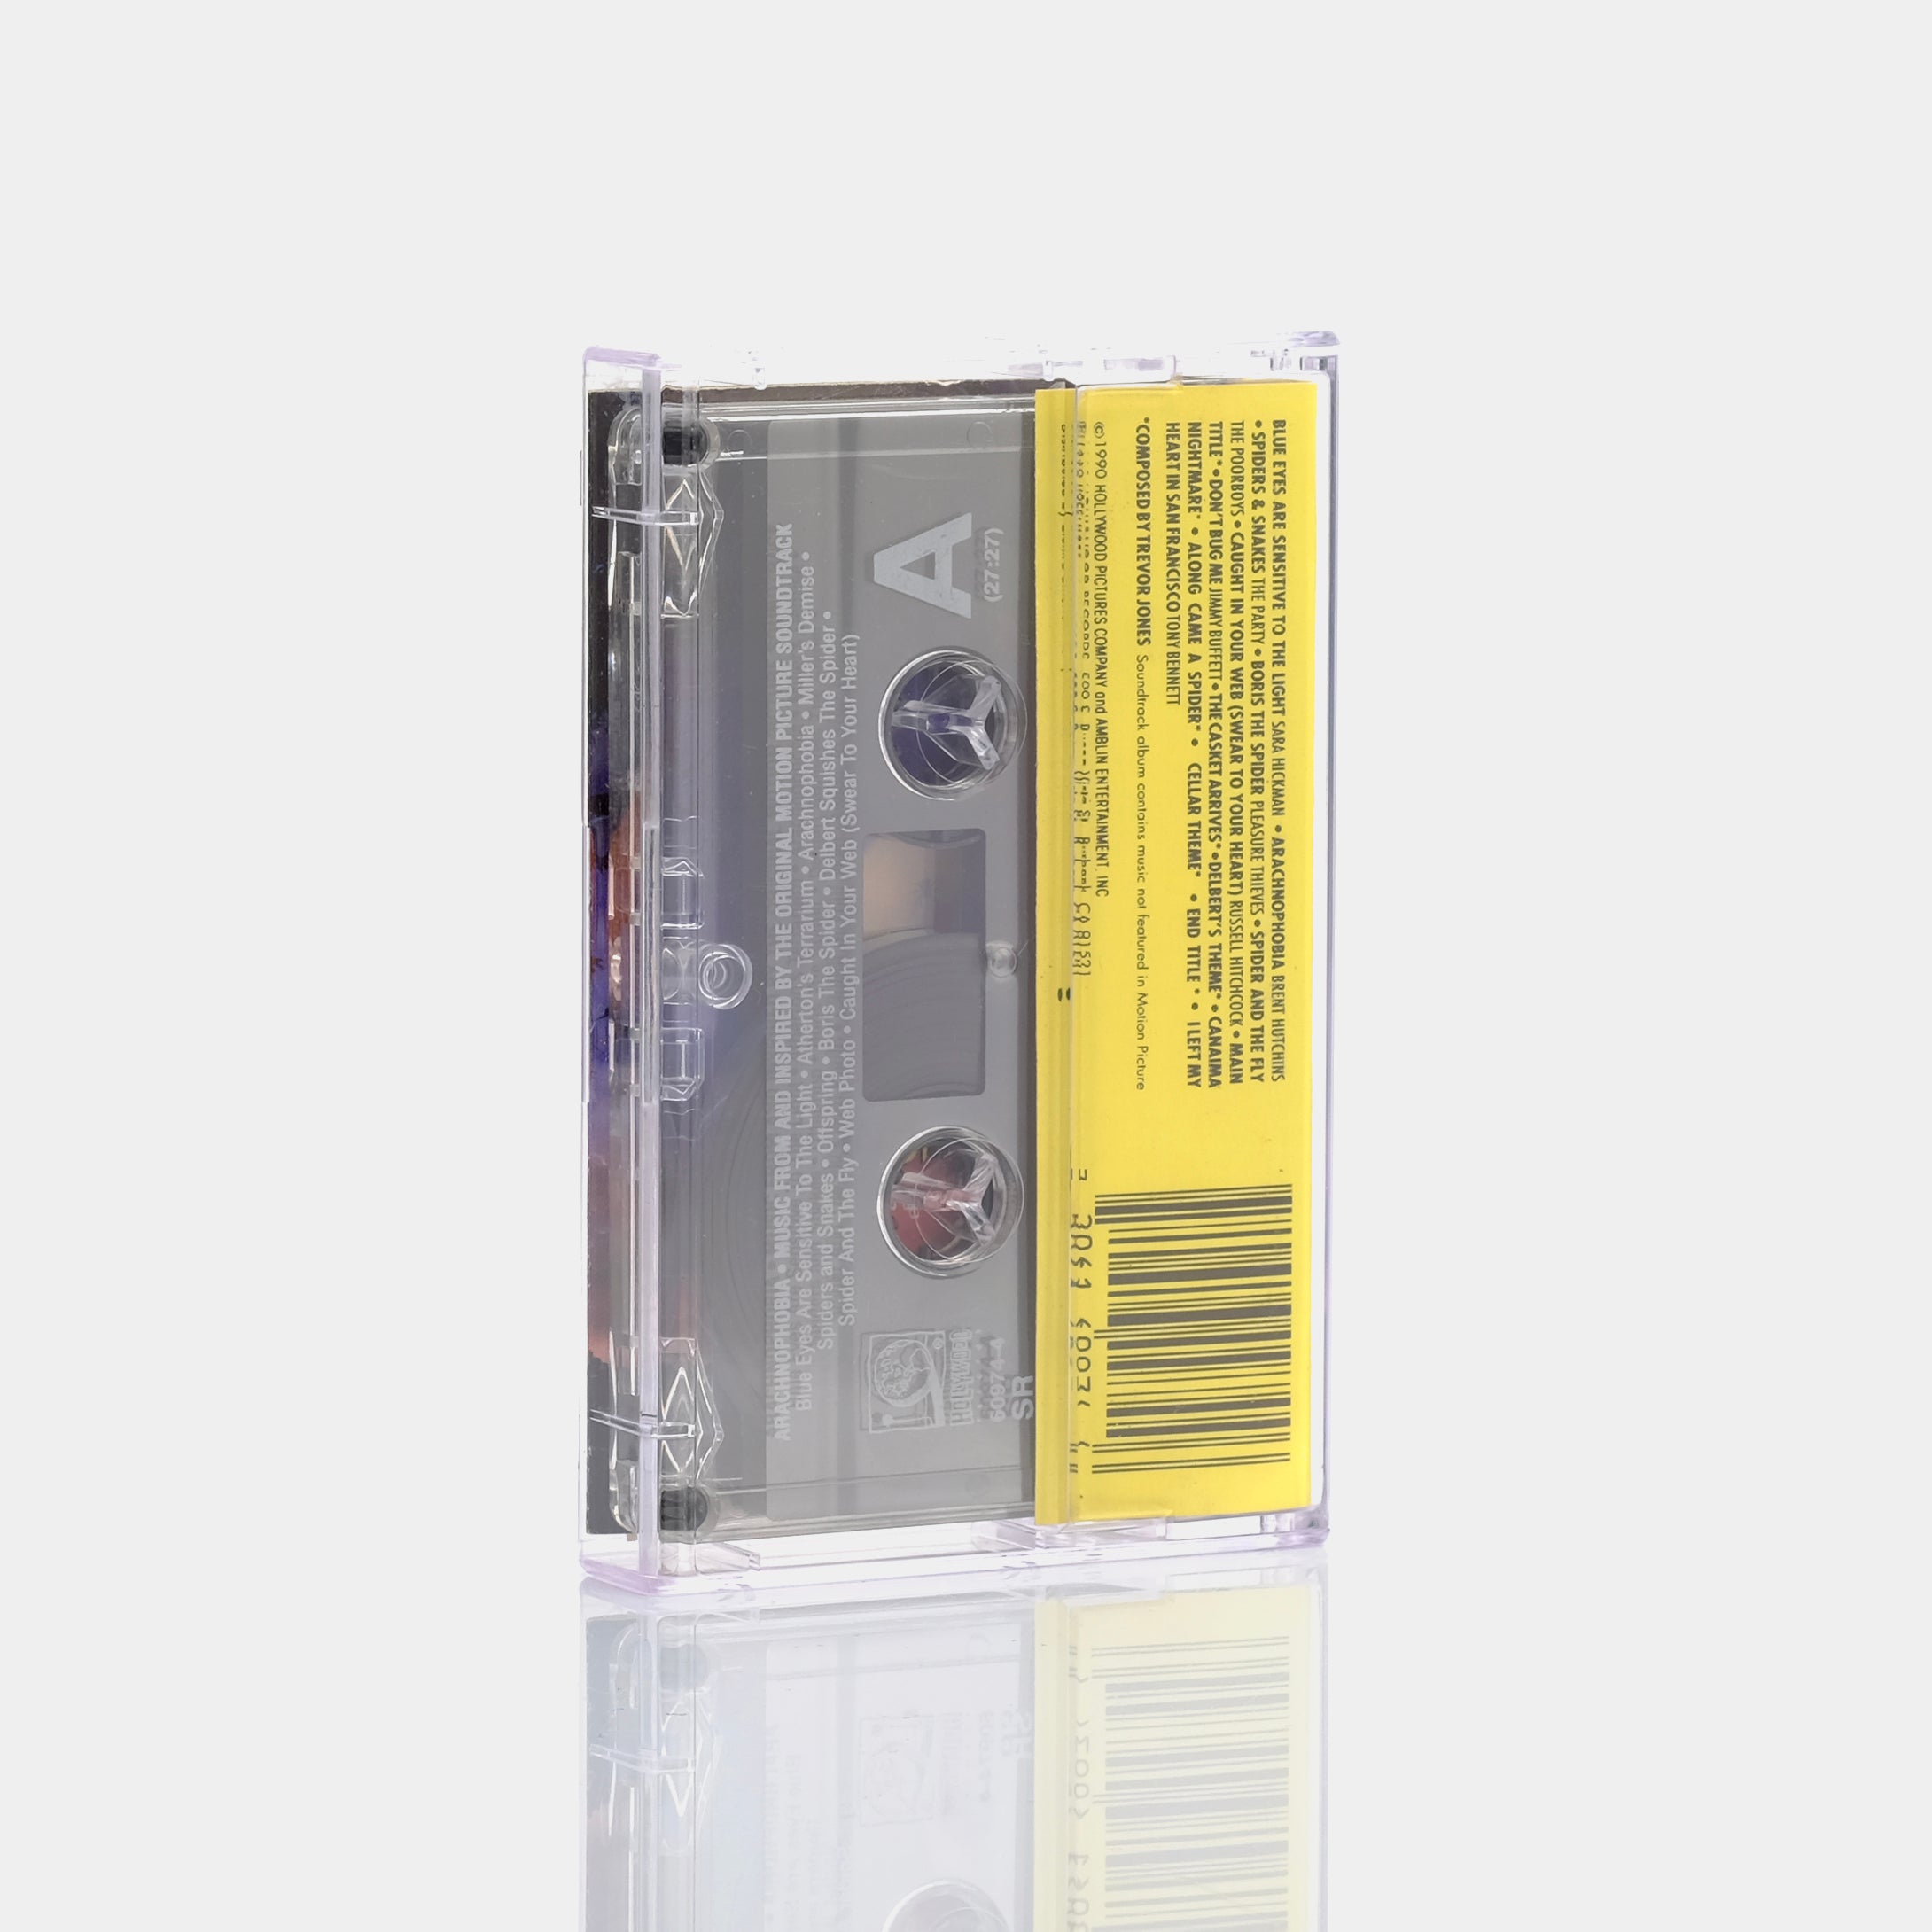 Trevor Jones - Arachnophobia (Original Motion Picture Soundtrack) Cassette Tape